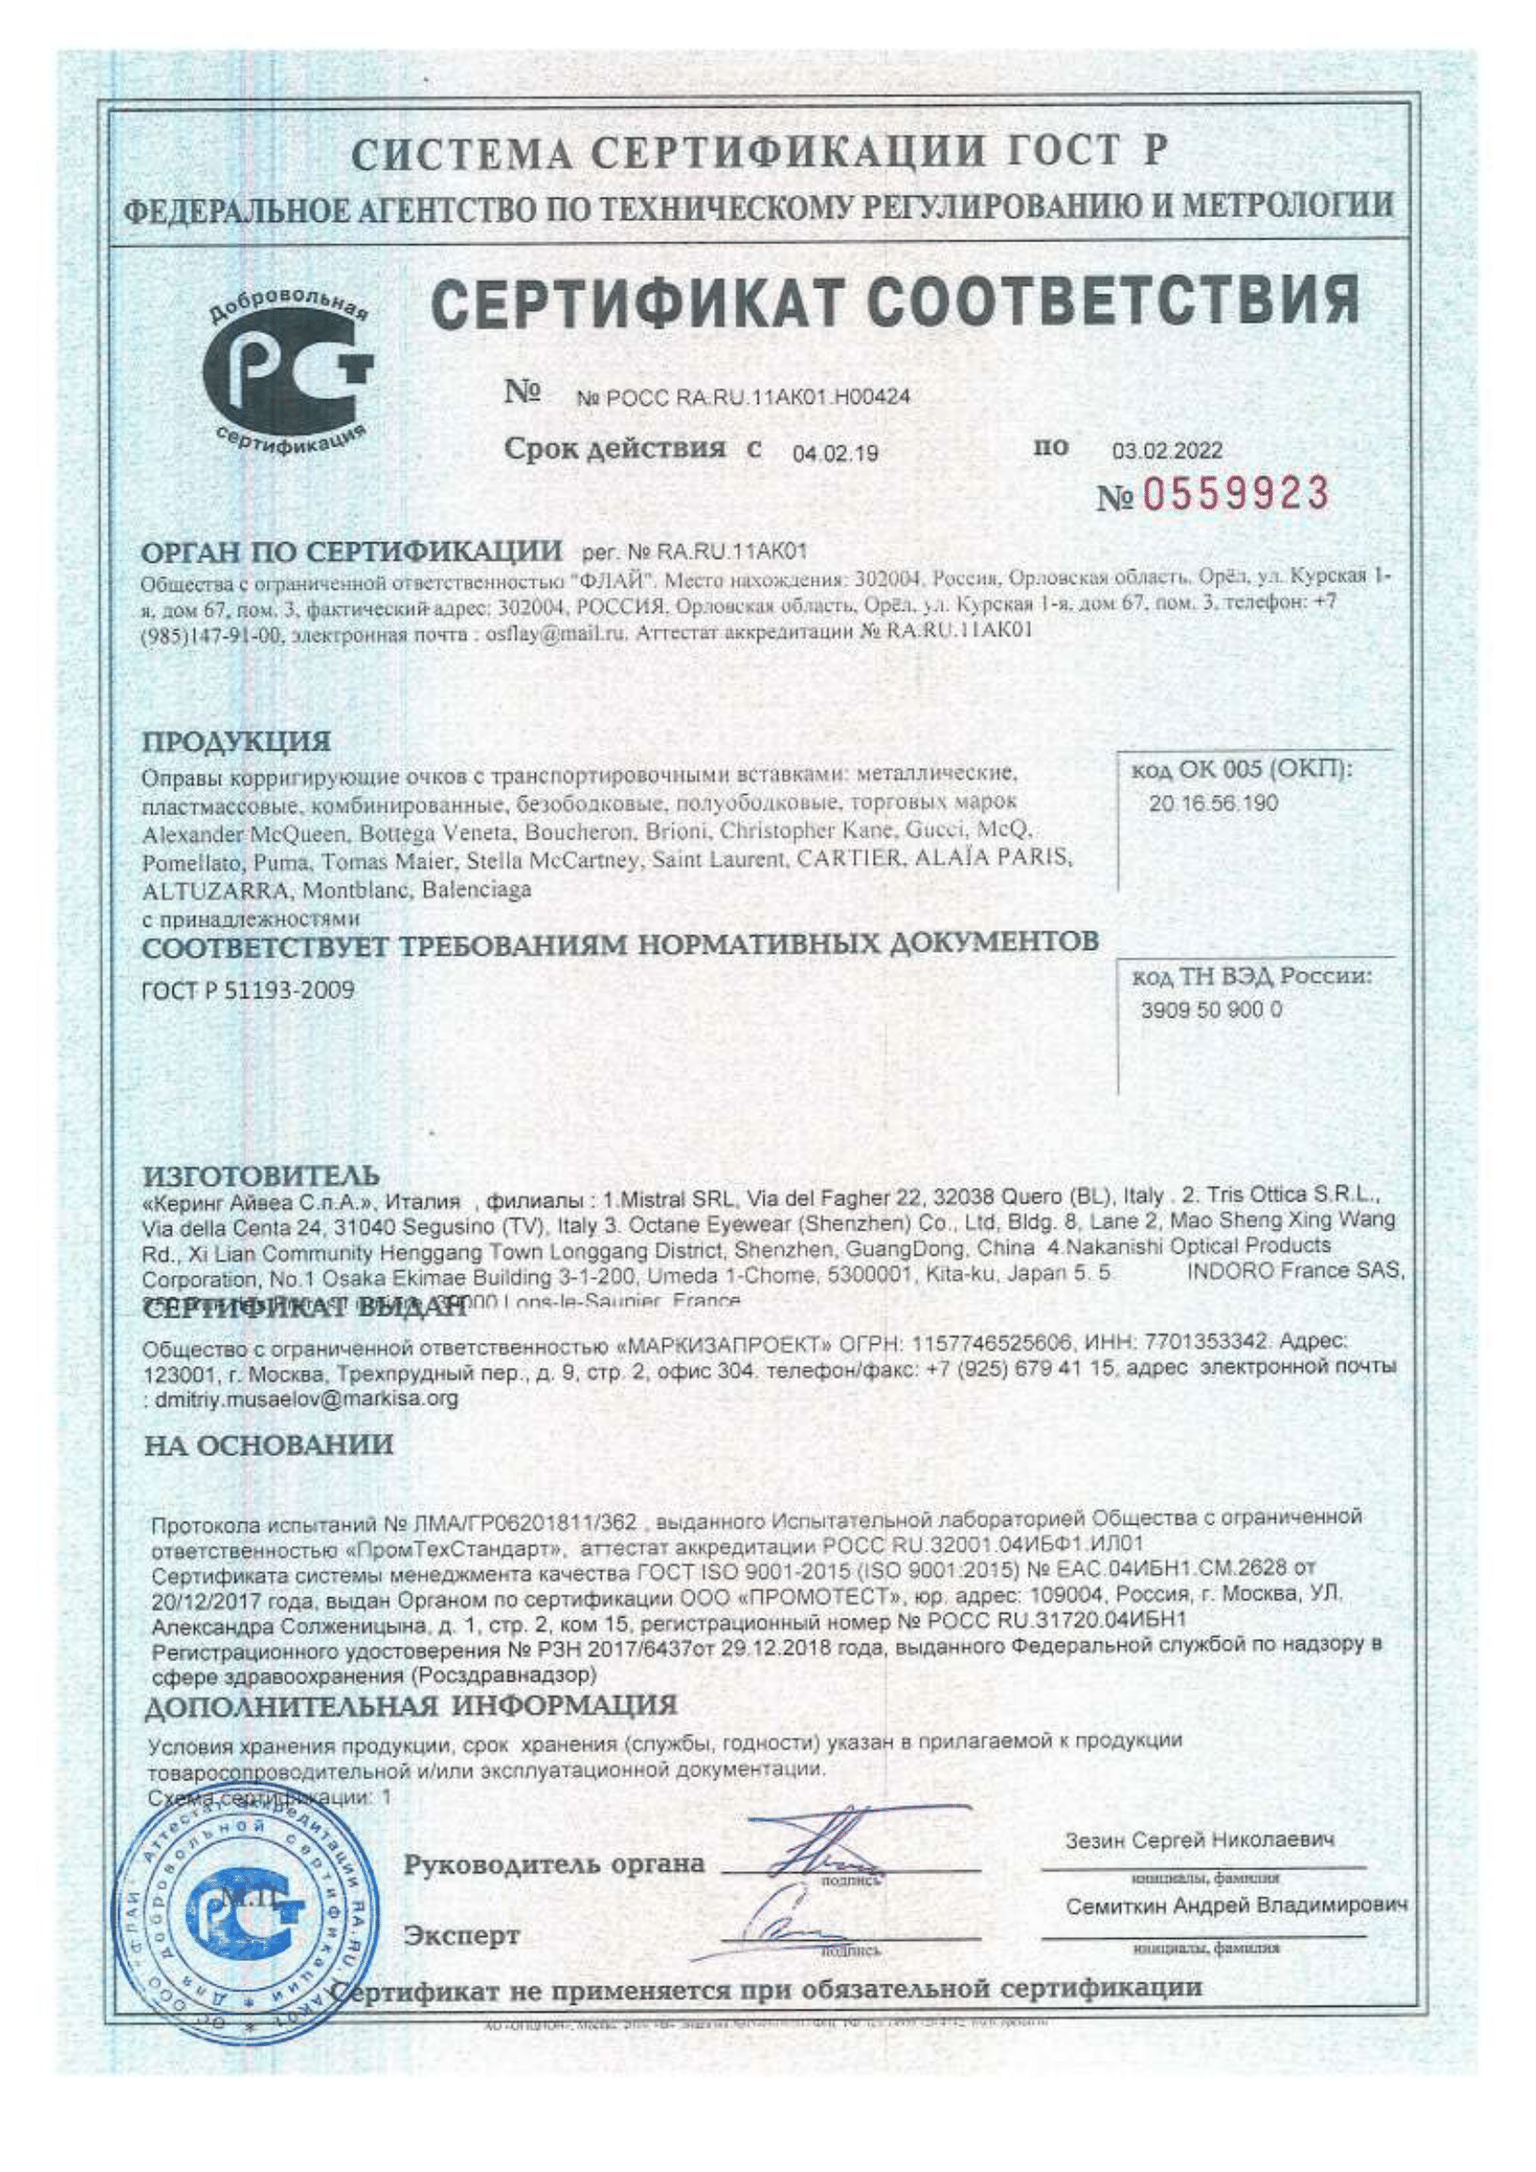 /images/certificates/sertificate4-15.png